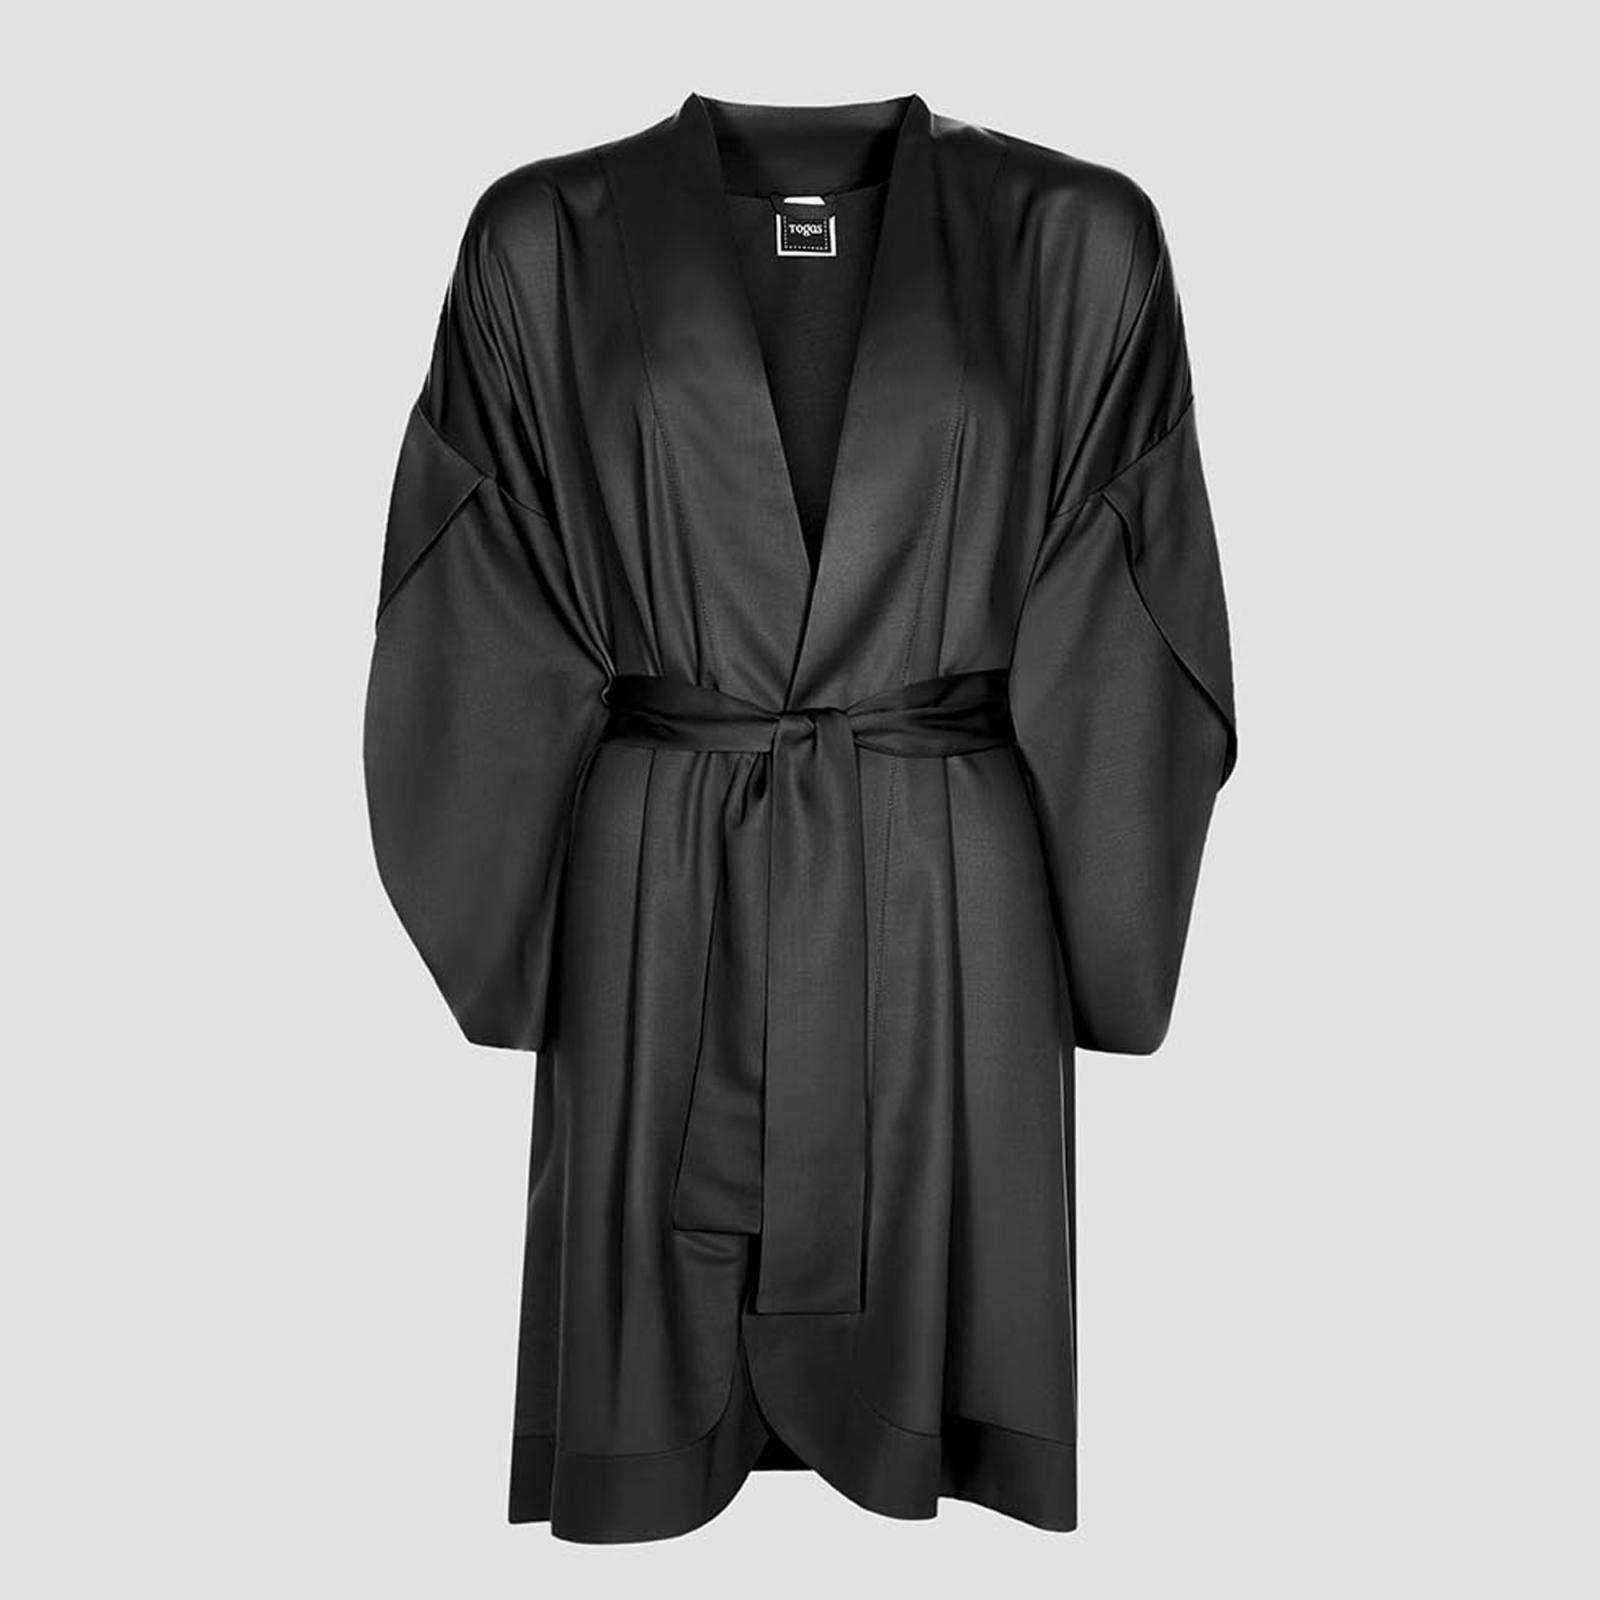 Халат-кимоно короткое Togas Наоми чёрное М (46) халат кимоно короткое togas наоми чёрное l 48